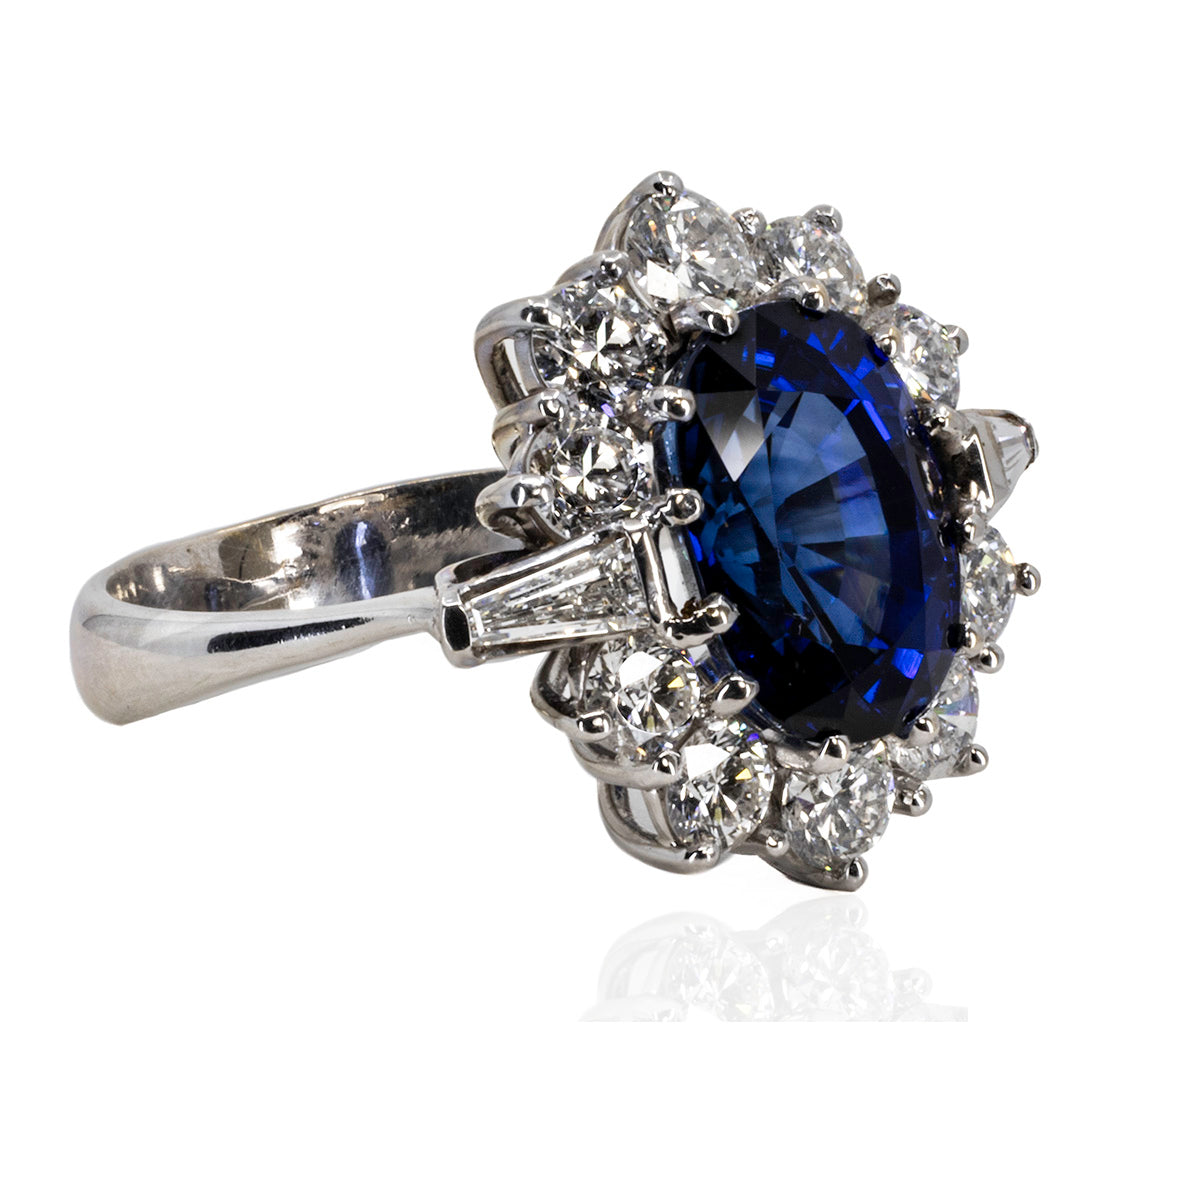 6.37 Carat Royal Blue Sapphire Ring